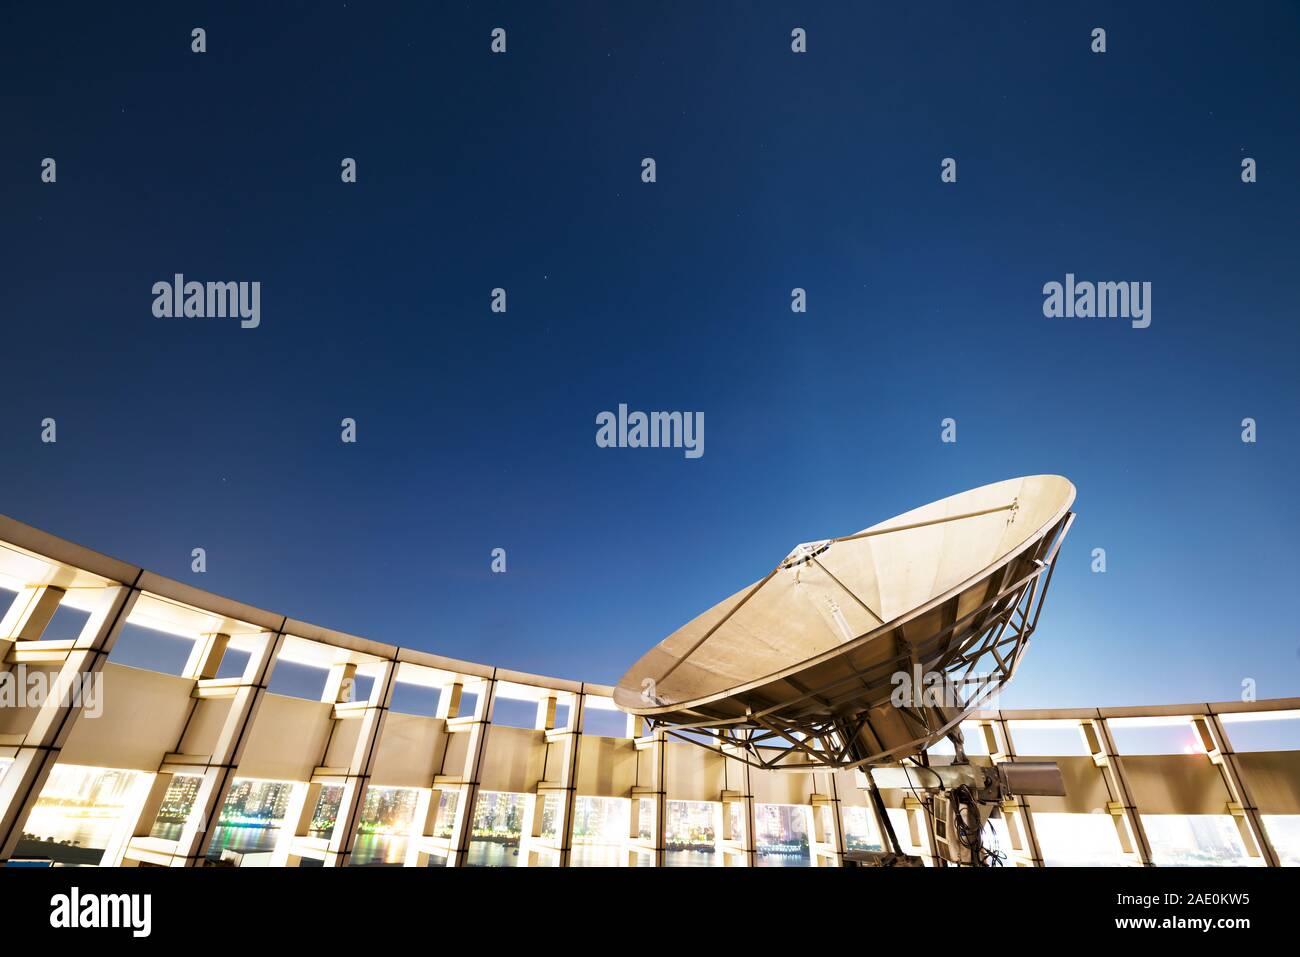 Satellite dish sky sun stars communication technology network image background for design sunset Stock Photo